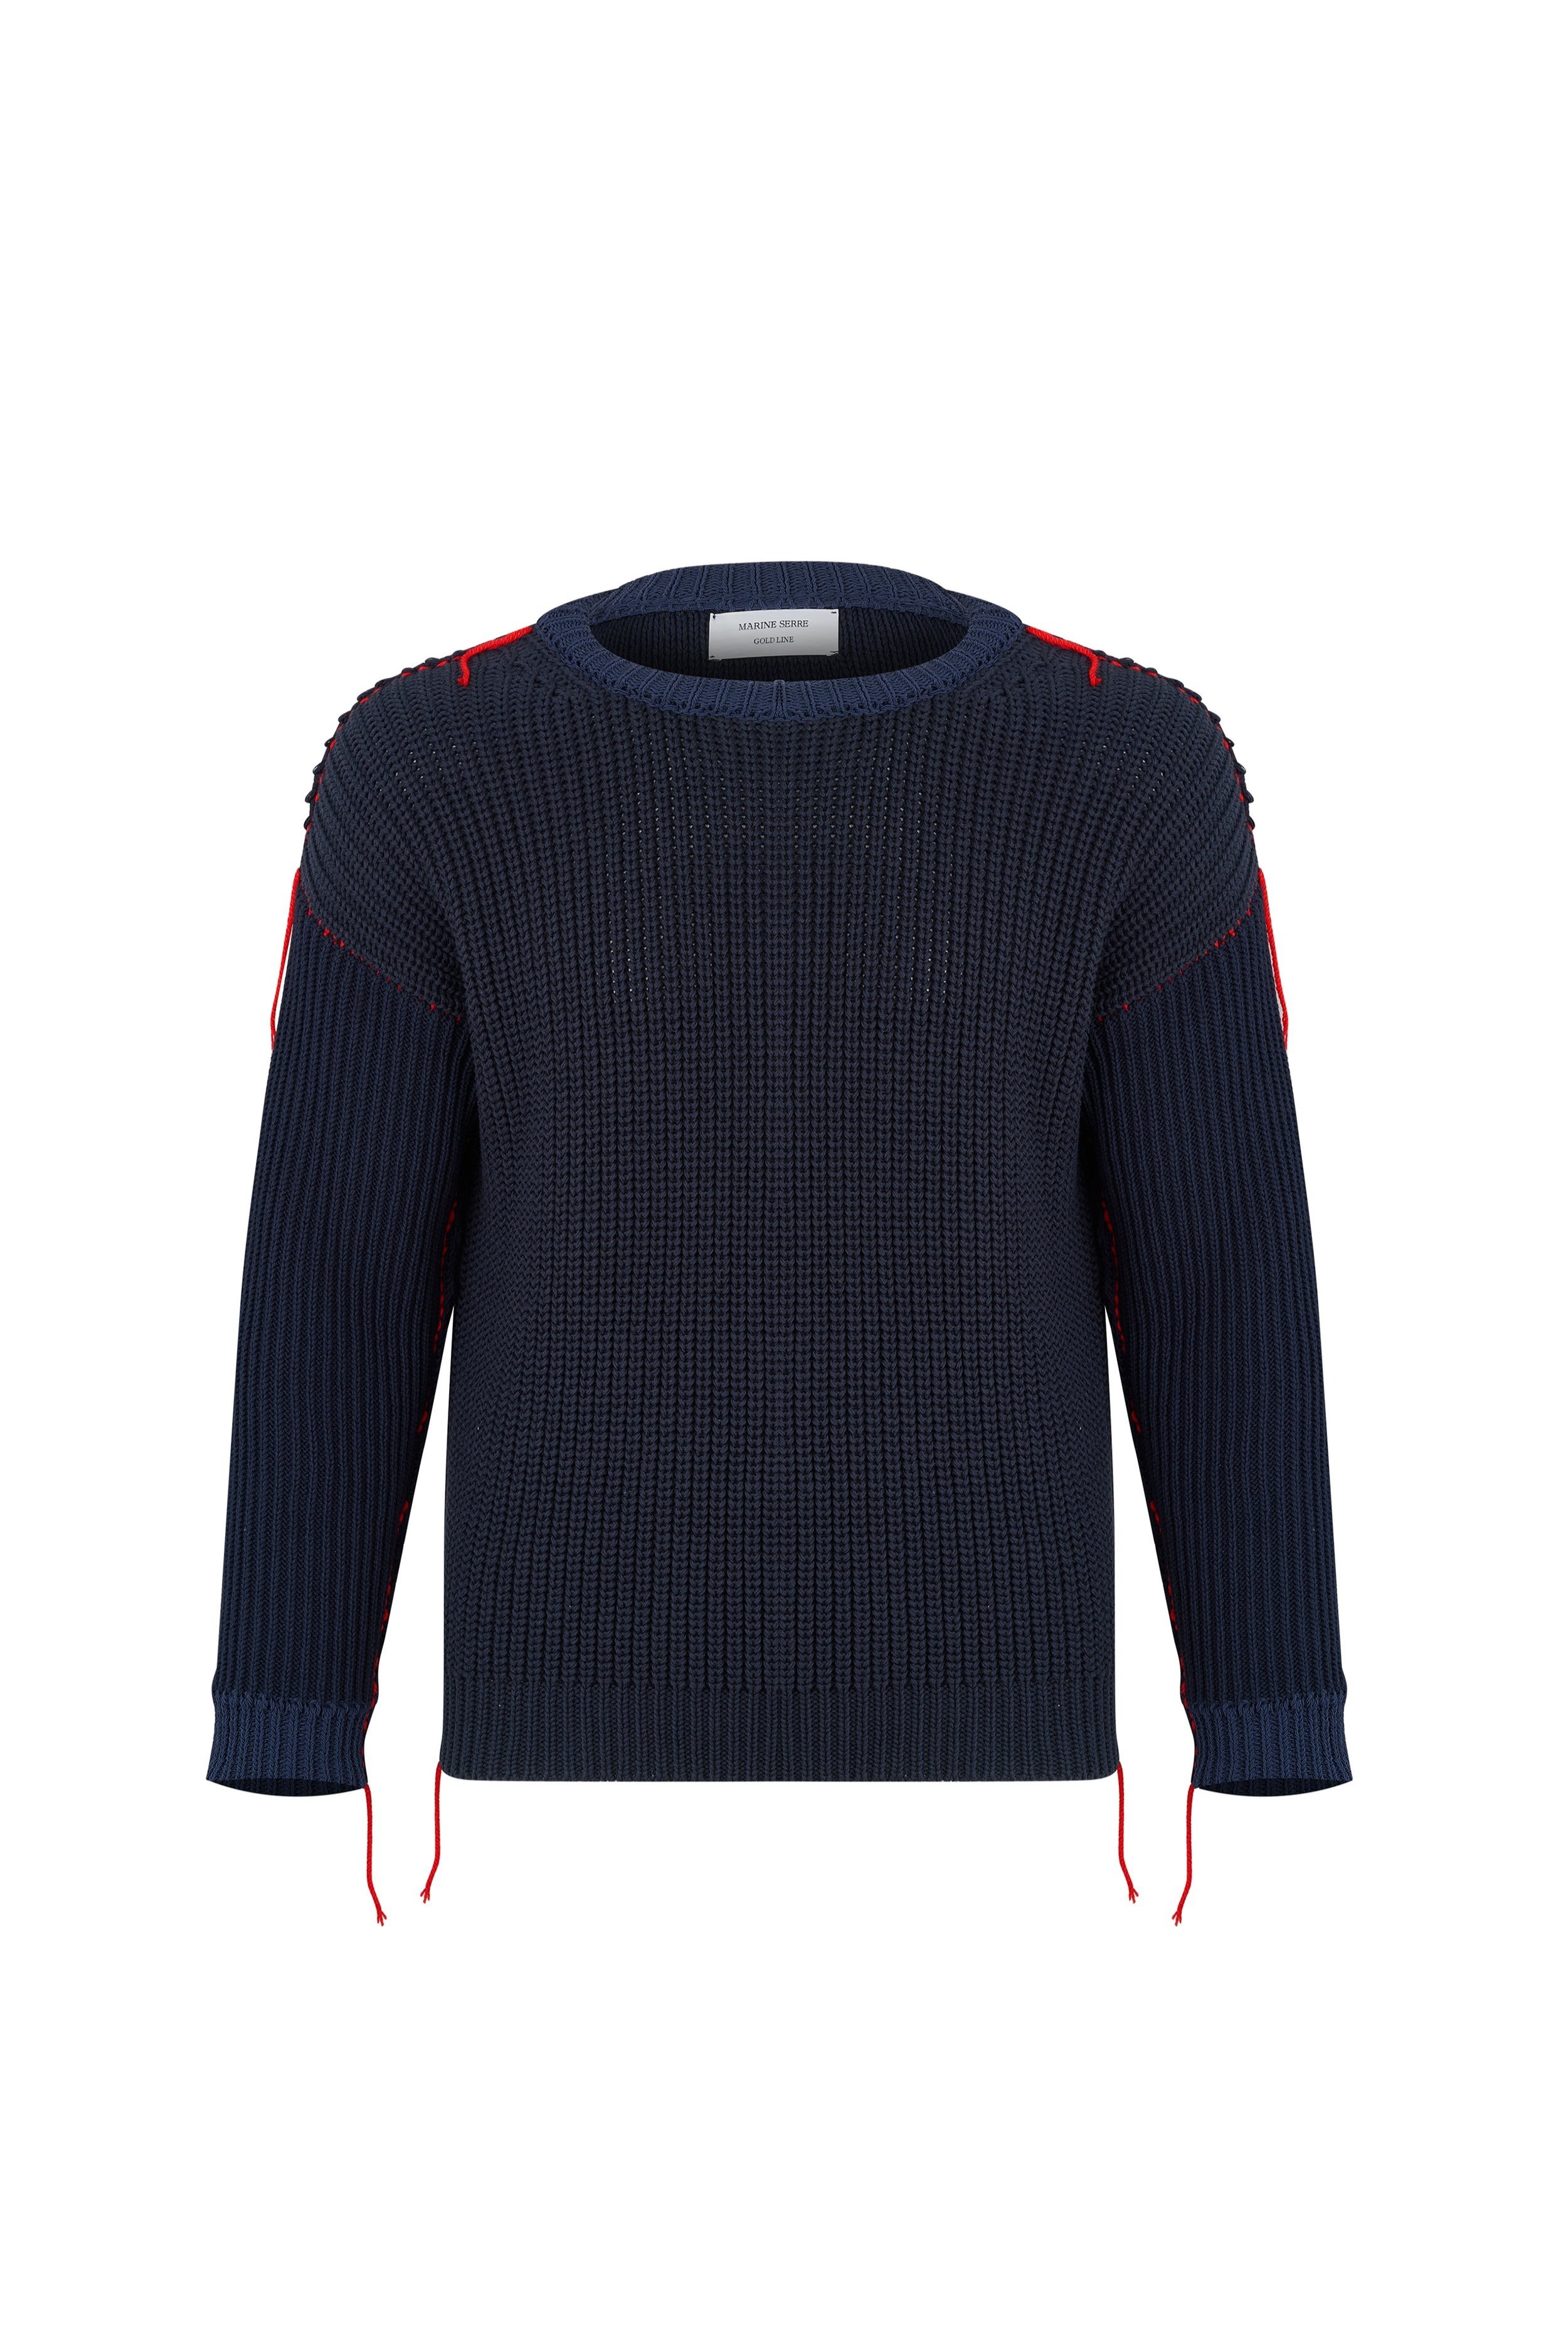 Marine Serre Repurposed-Yarns Chunky Knit Sweater — SLOW WAVES